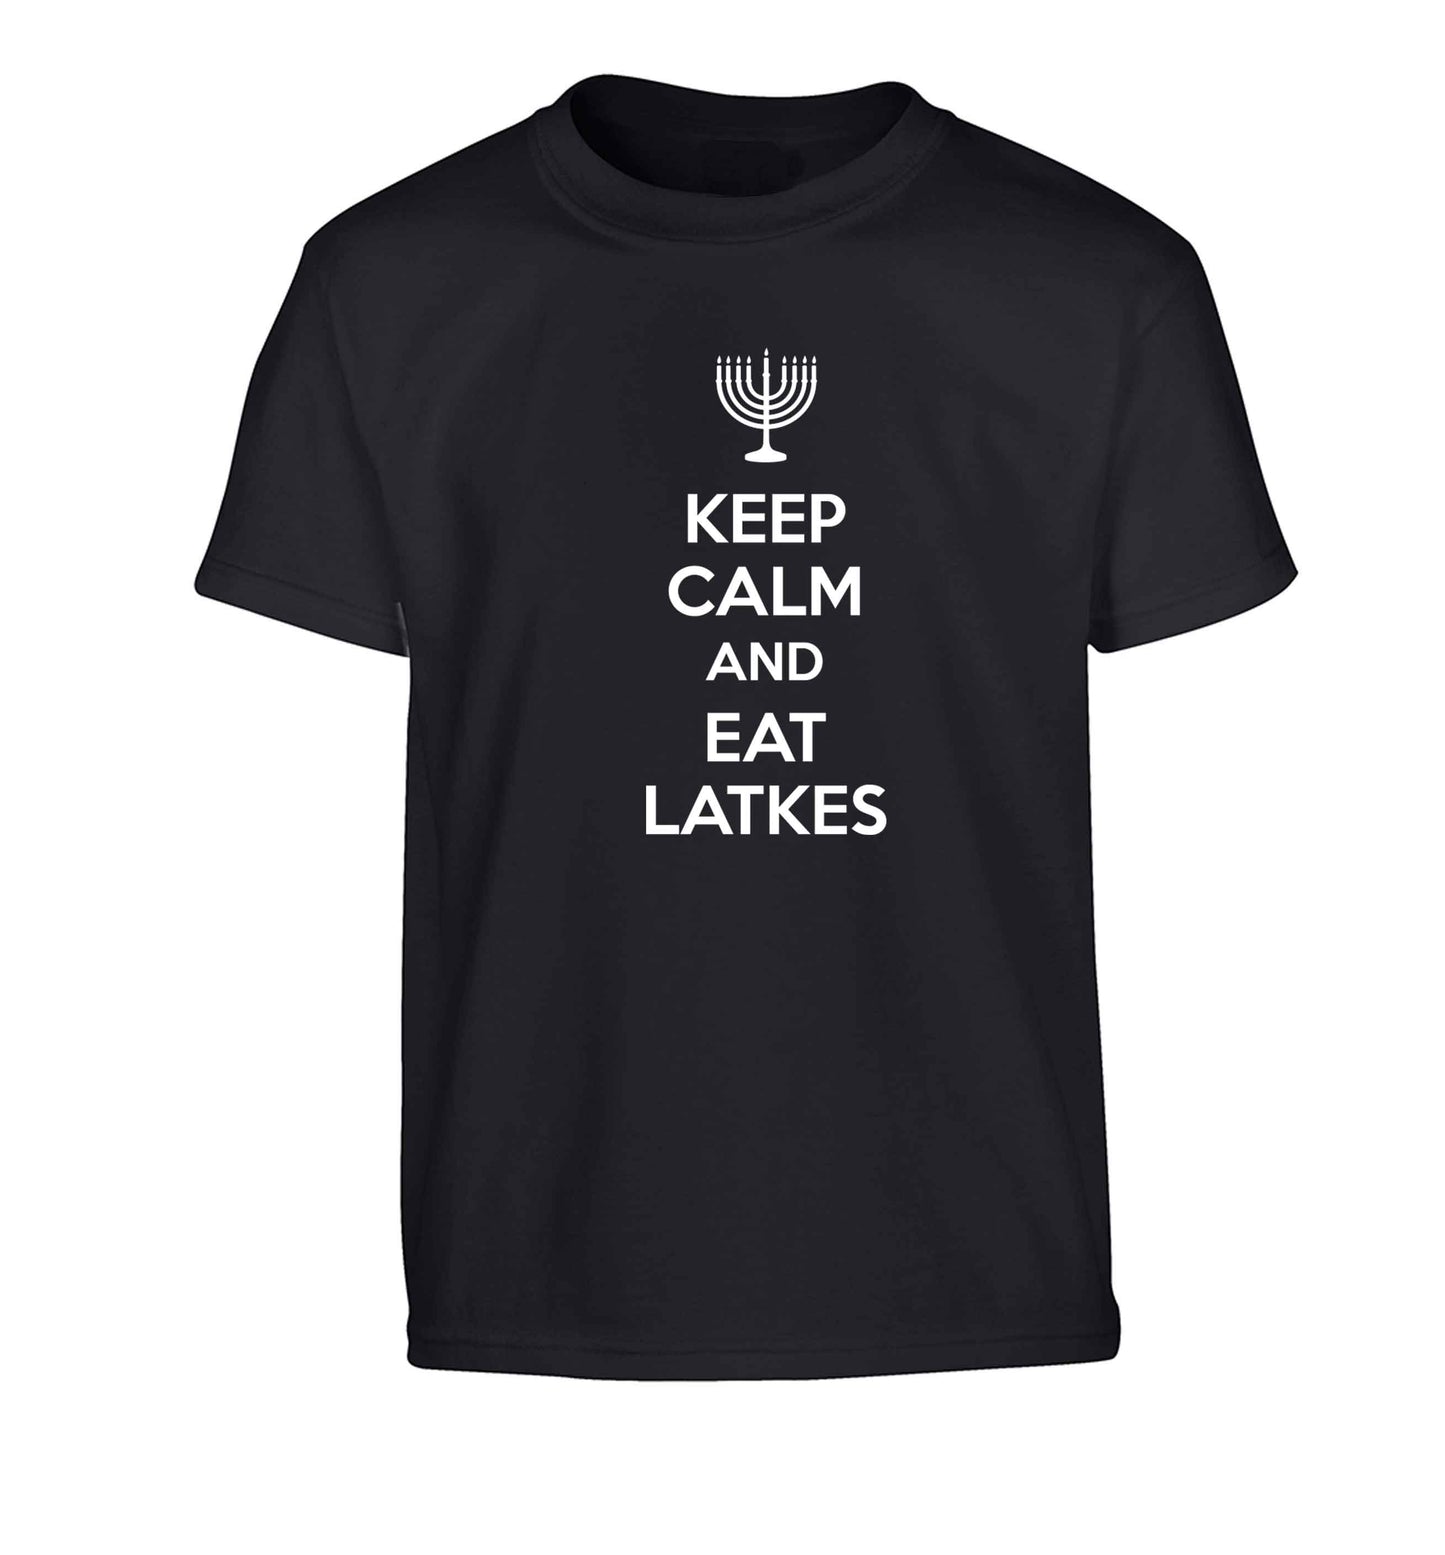 Keep calm and eat latkes Children's black Tshirt 12-13 Years